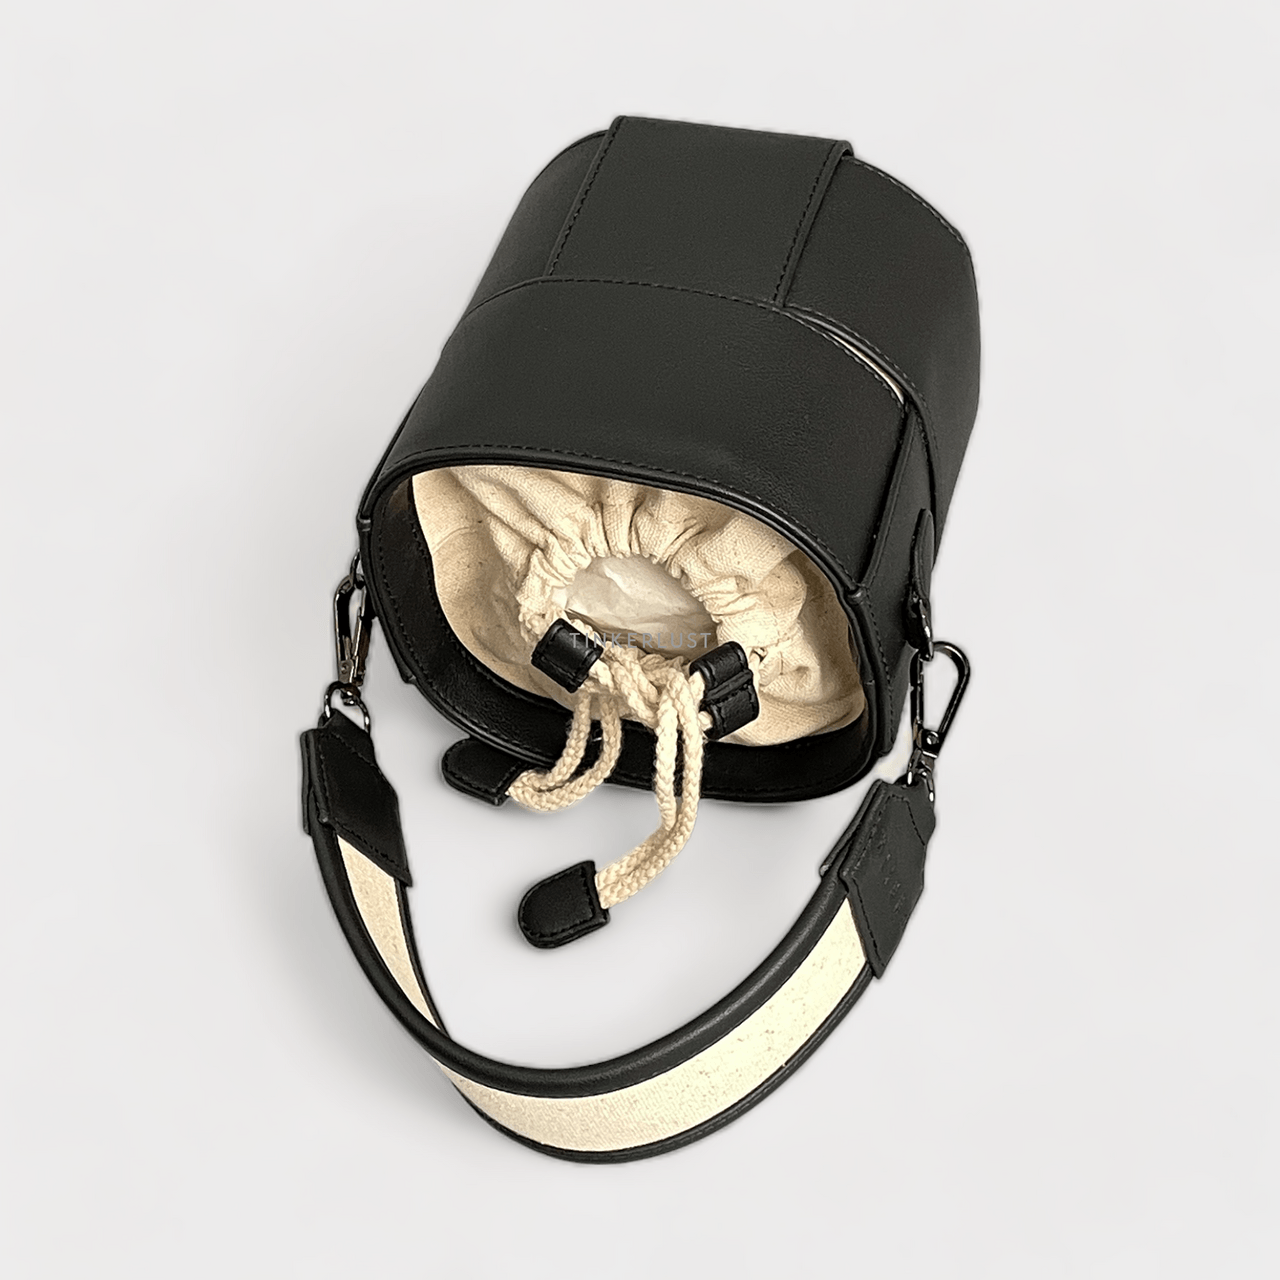 protea Ara Black Handbag